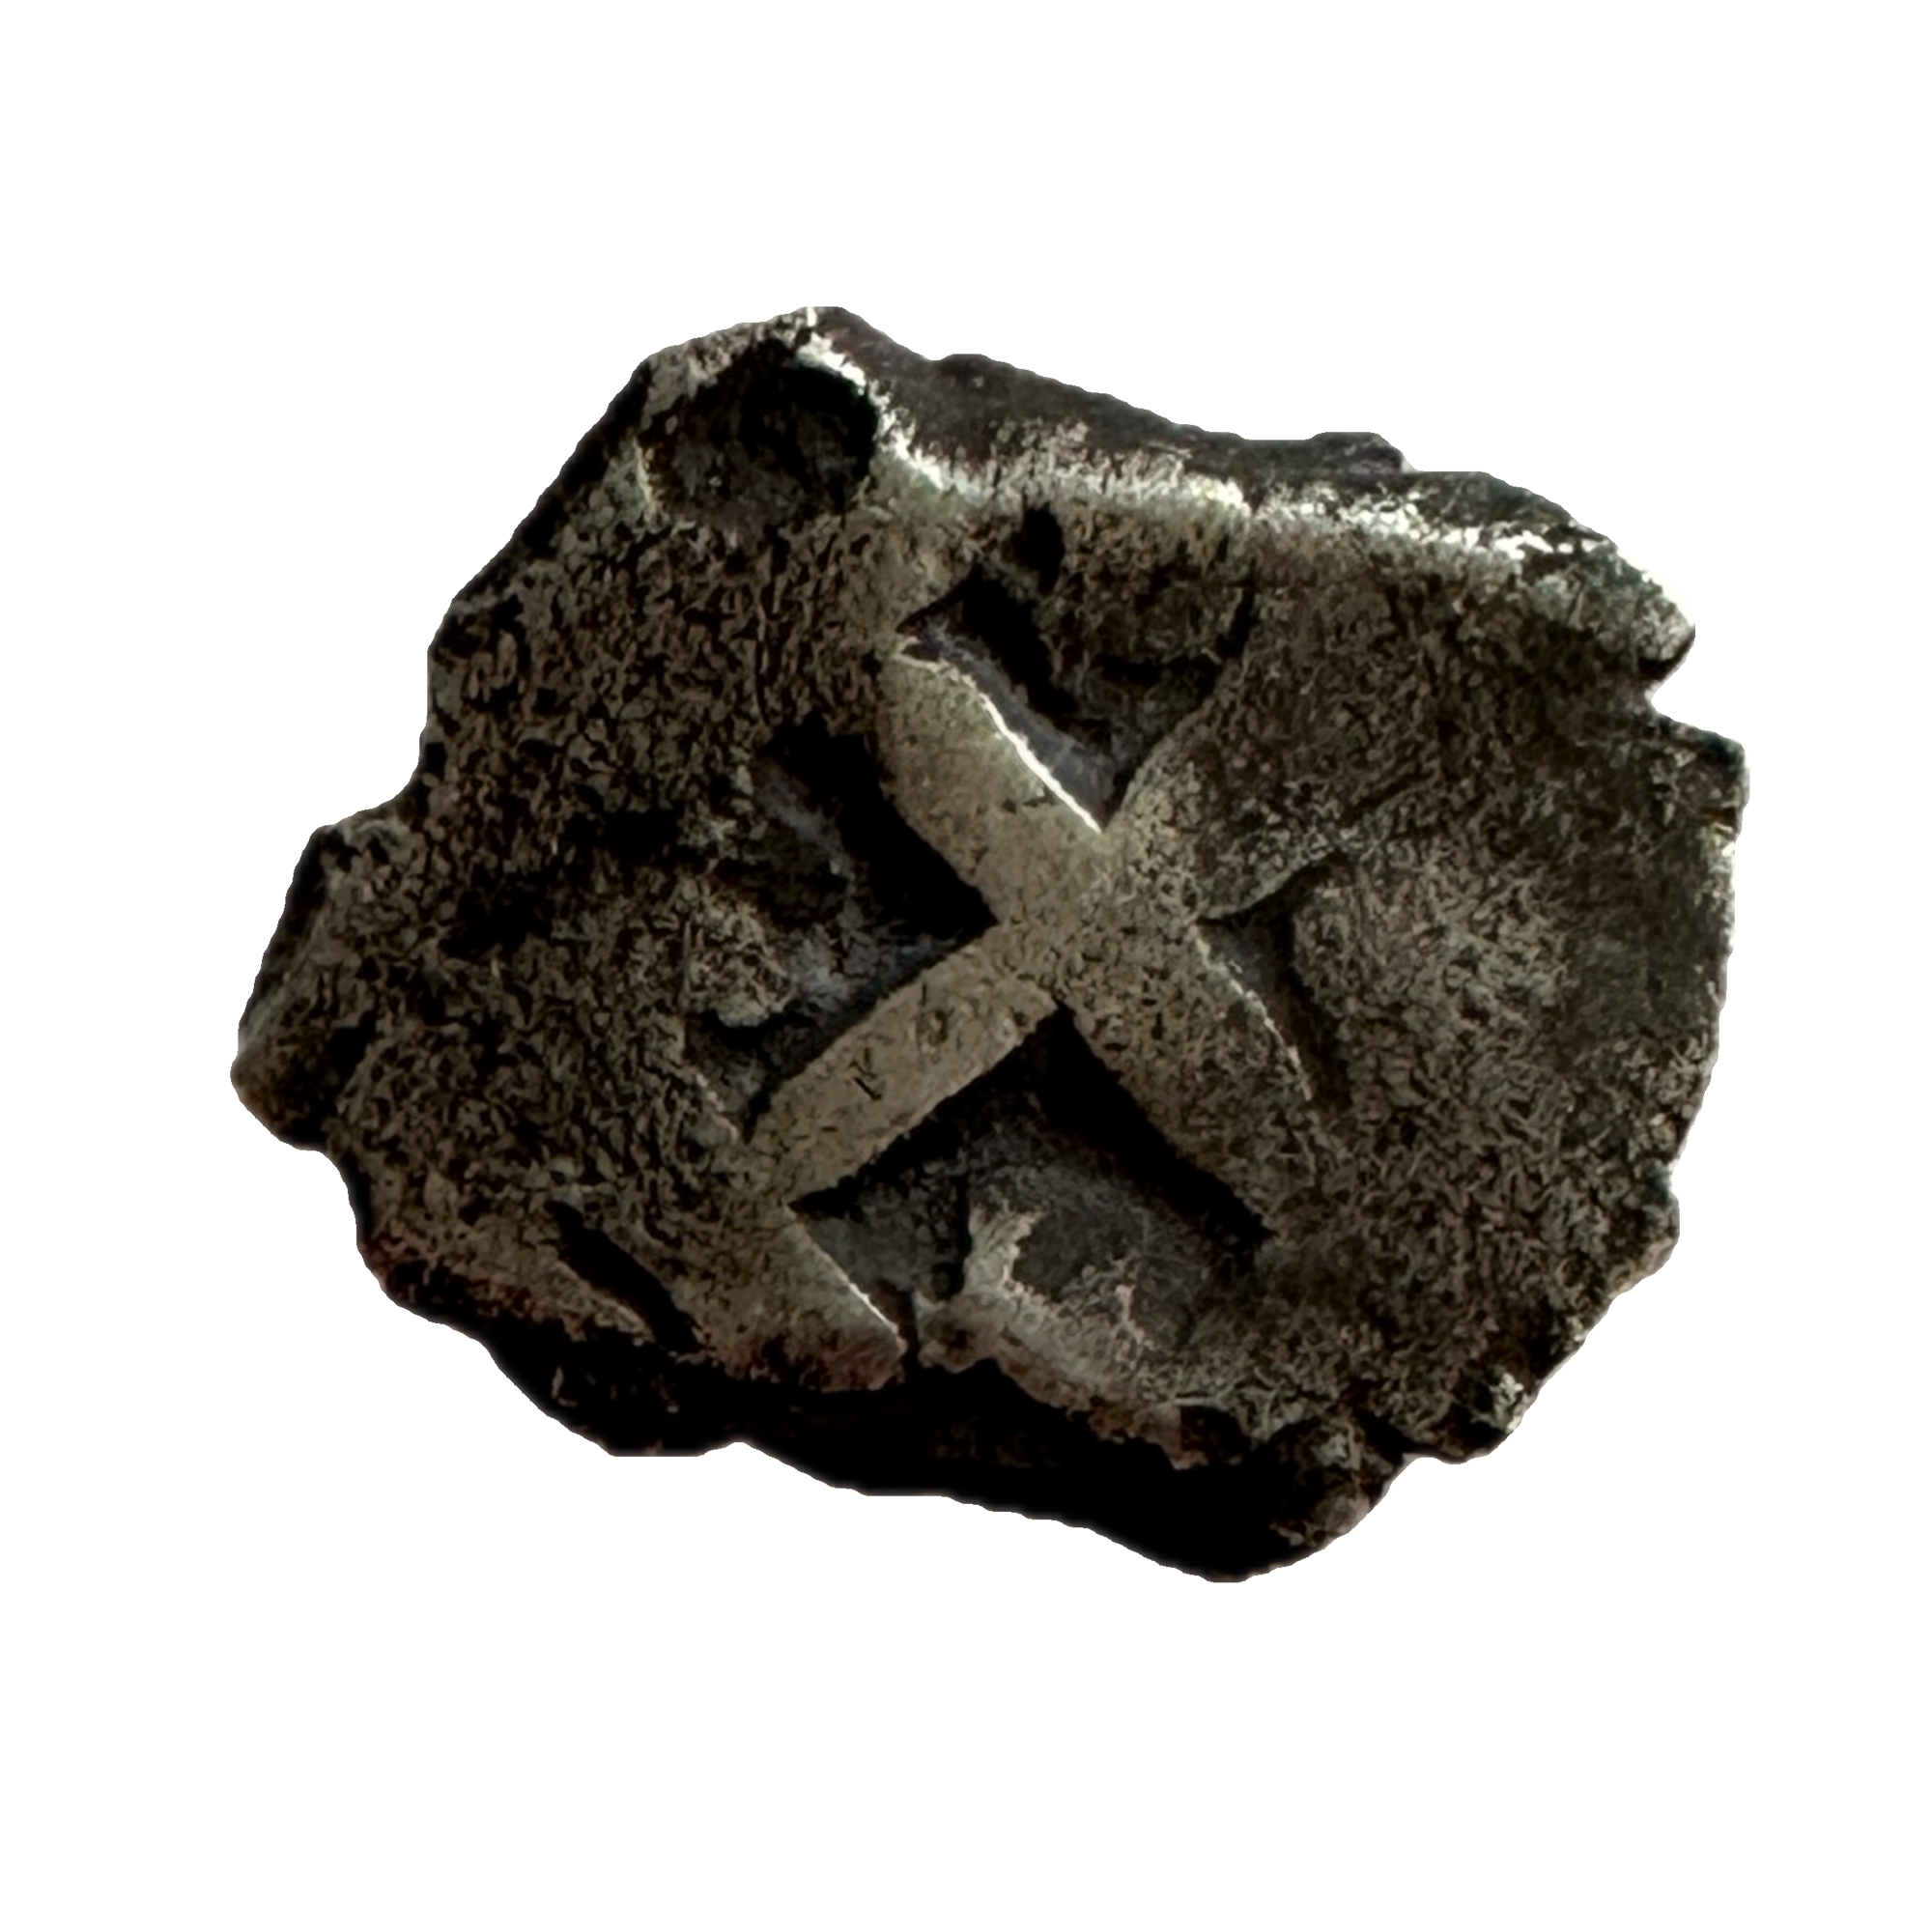 Shipwreck Silver treasure Cob, 1/2 Reale, Good detail Prehistoric Online